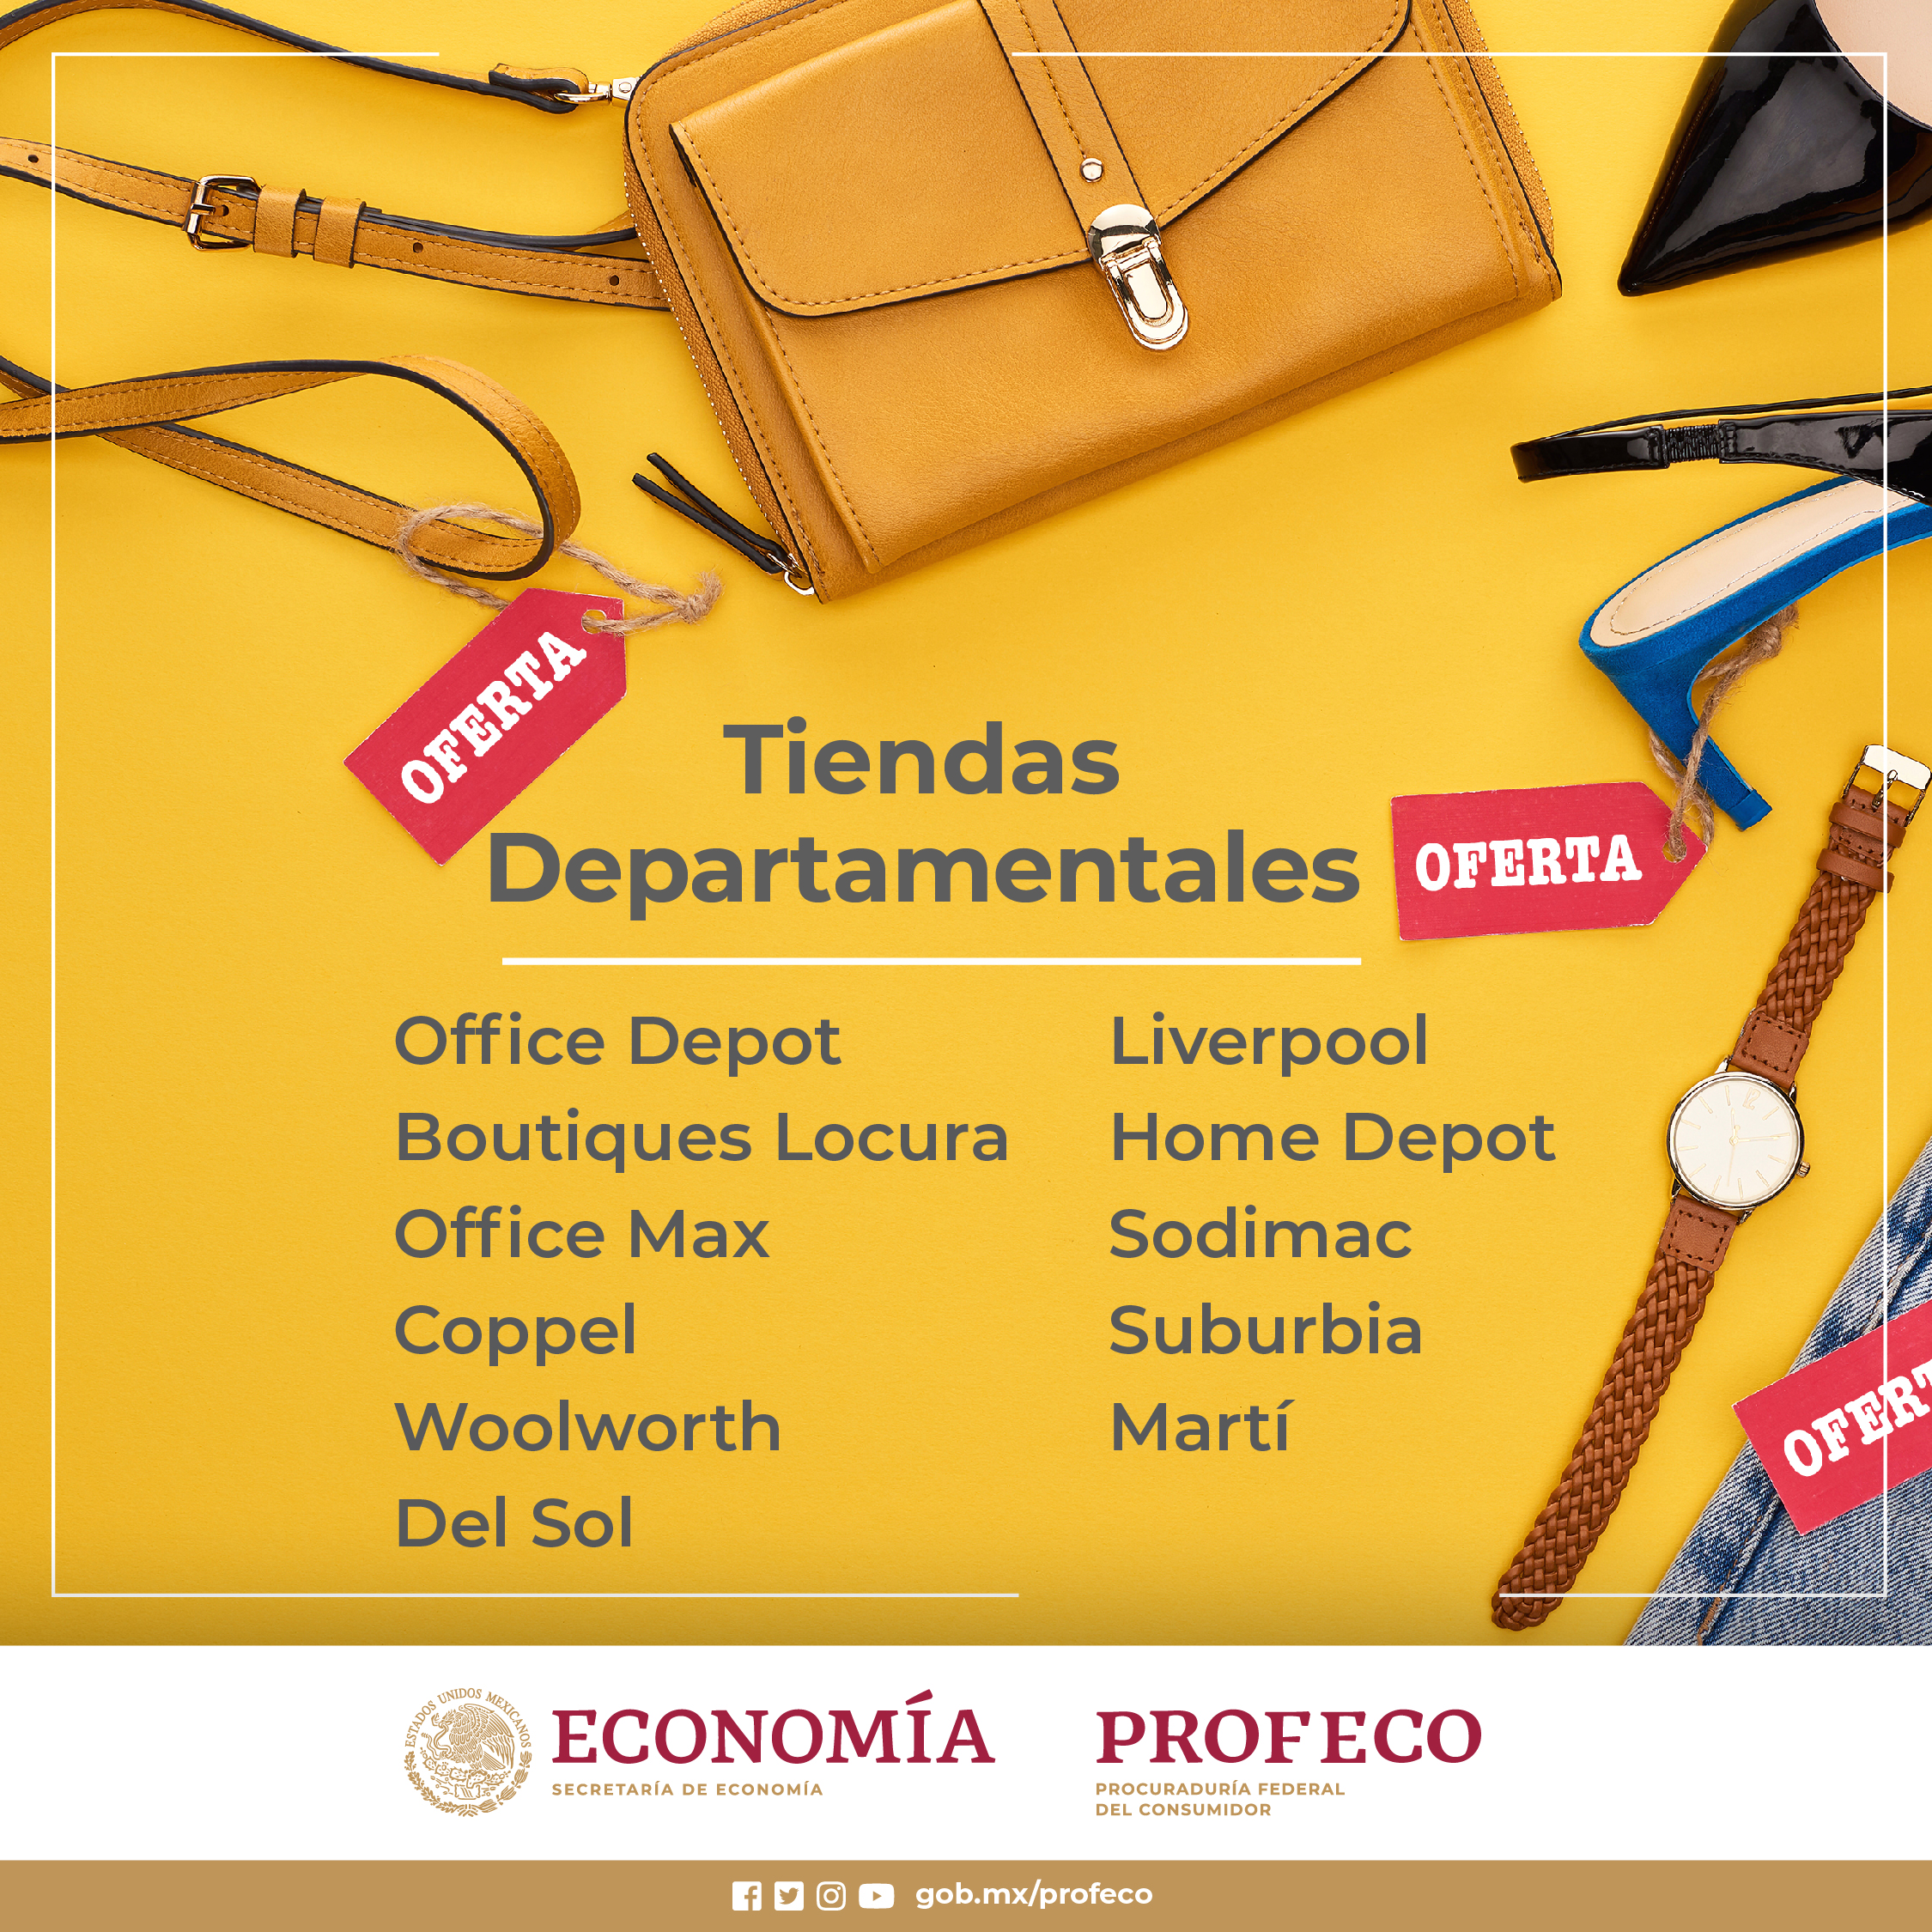 Office Depot México on Twitter: 